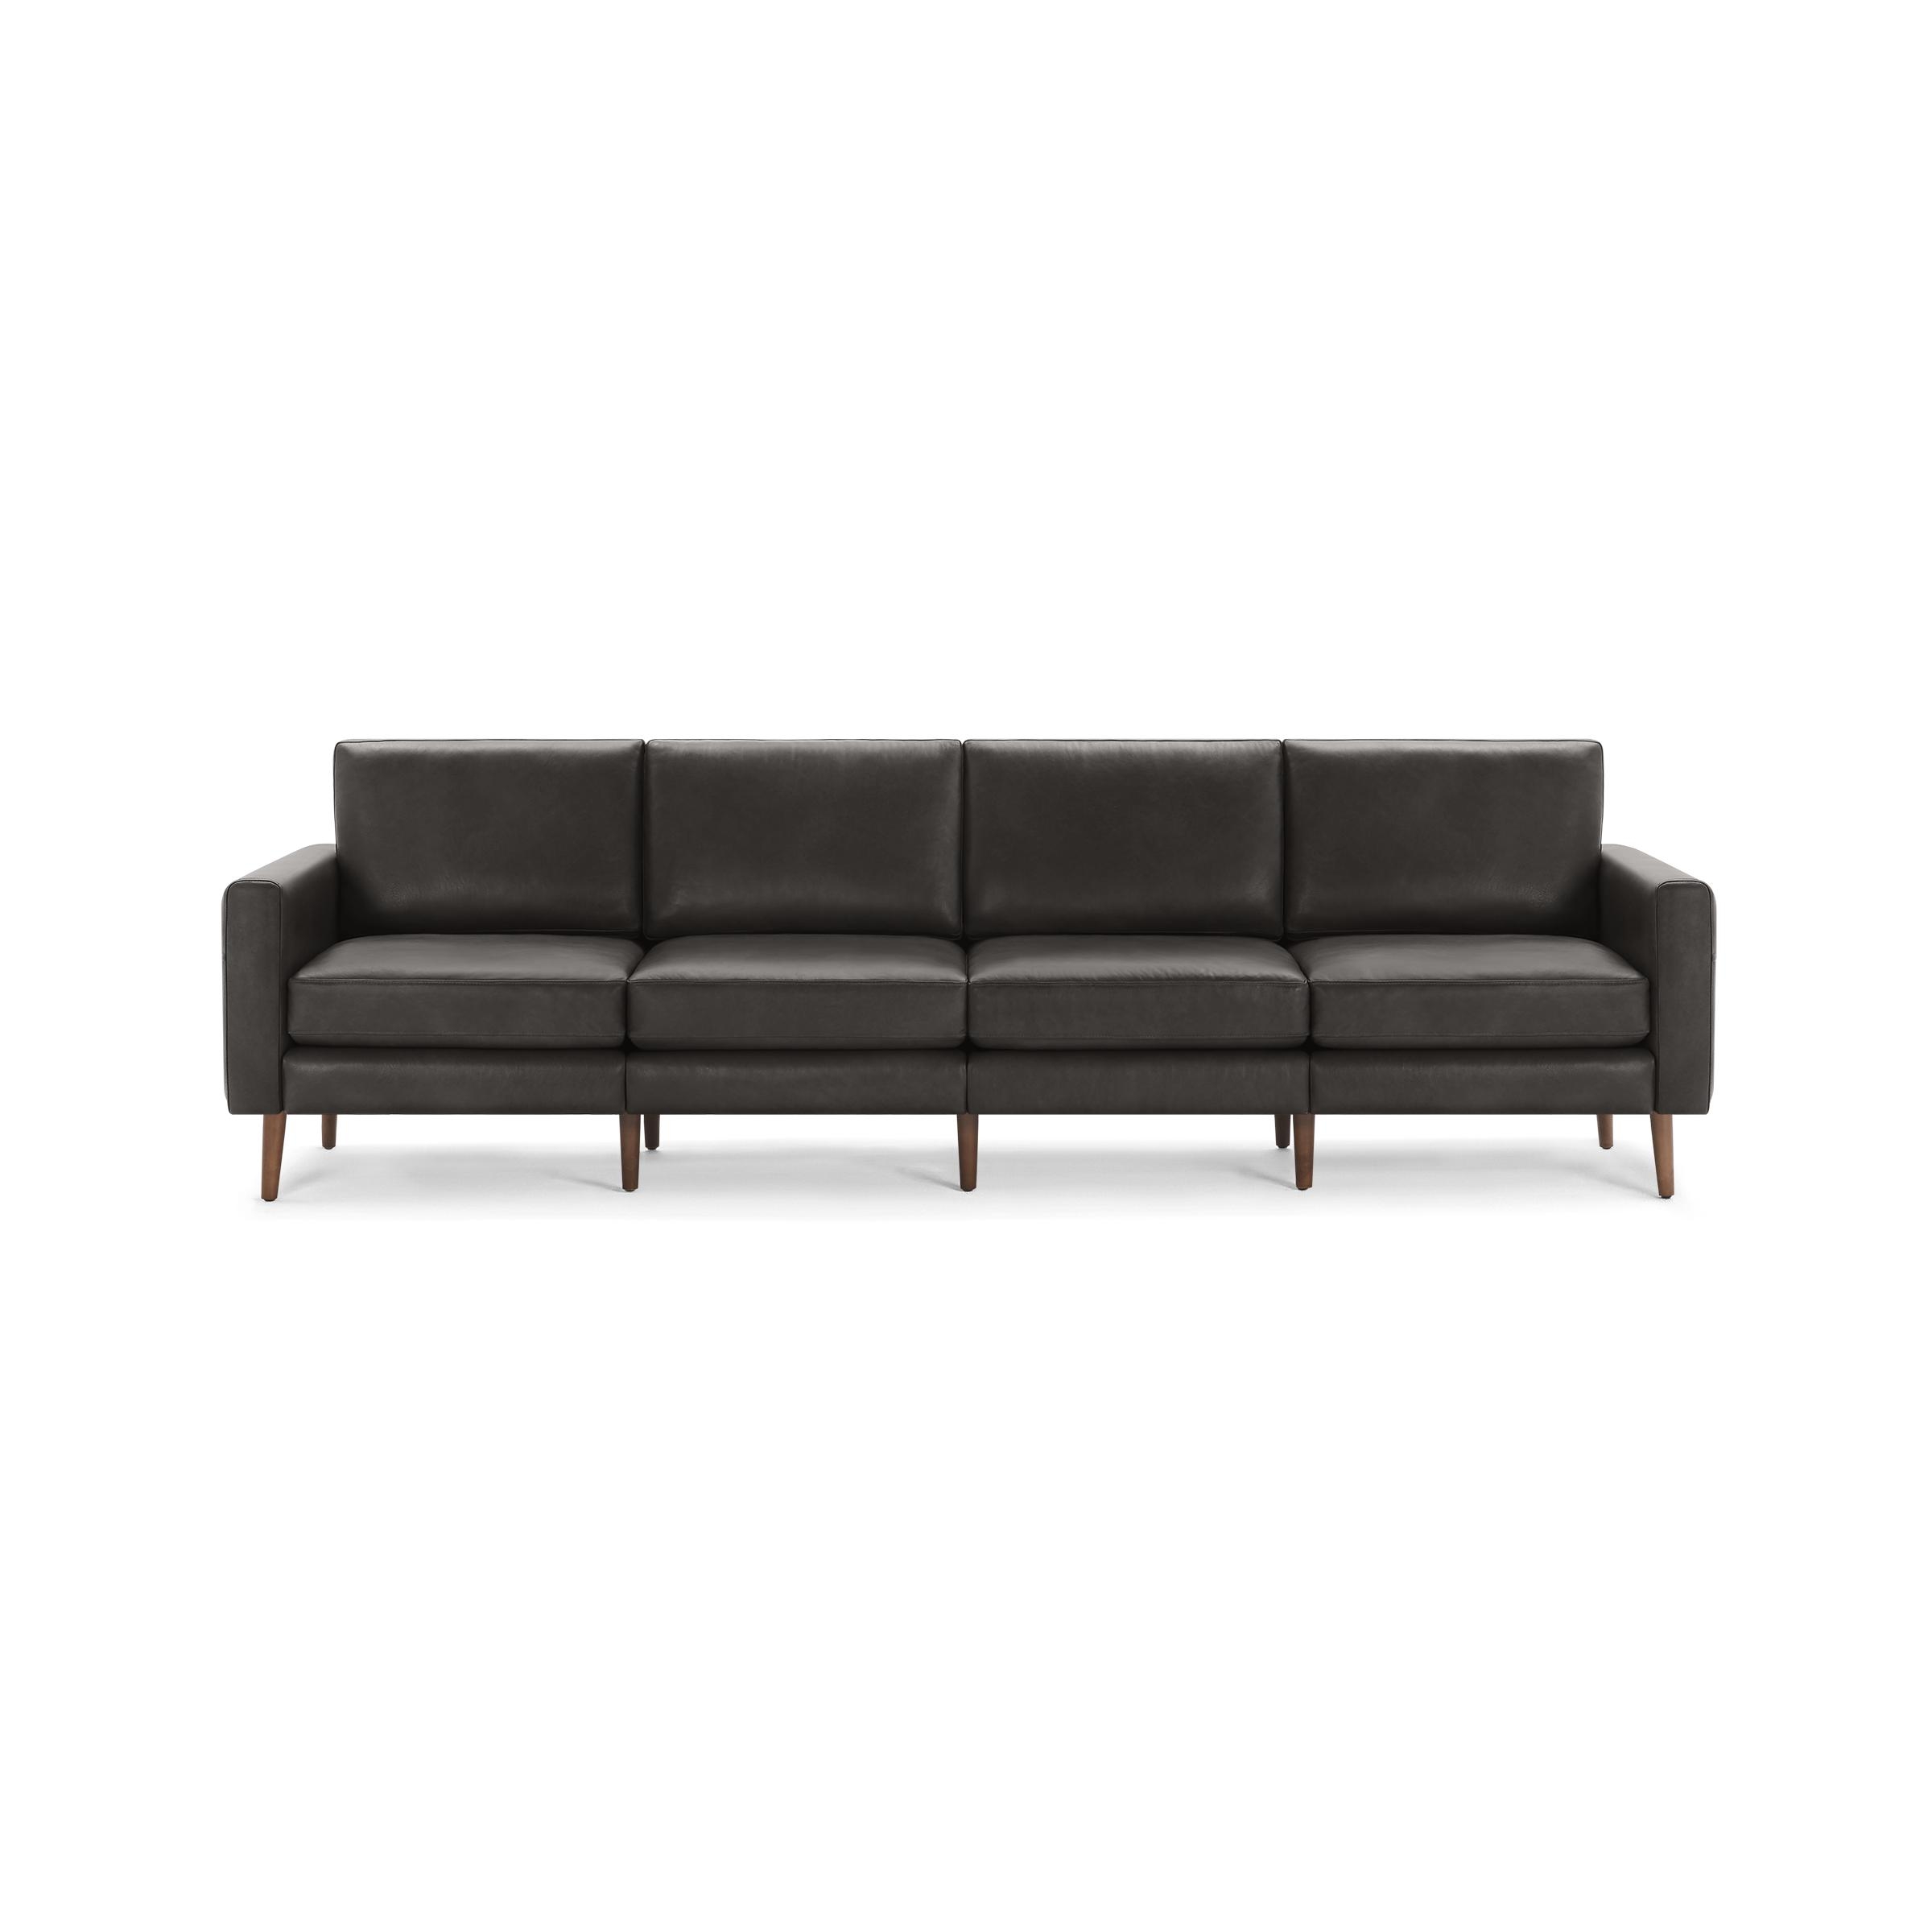 Nomad Leather King Sofa in Slate, Walnut Legs, Leg Finish: WalnutLegs - Image 0